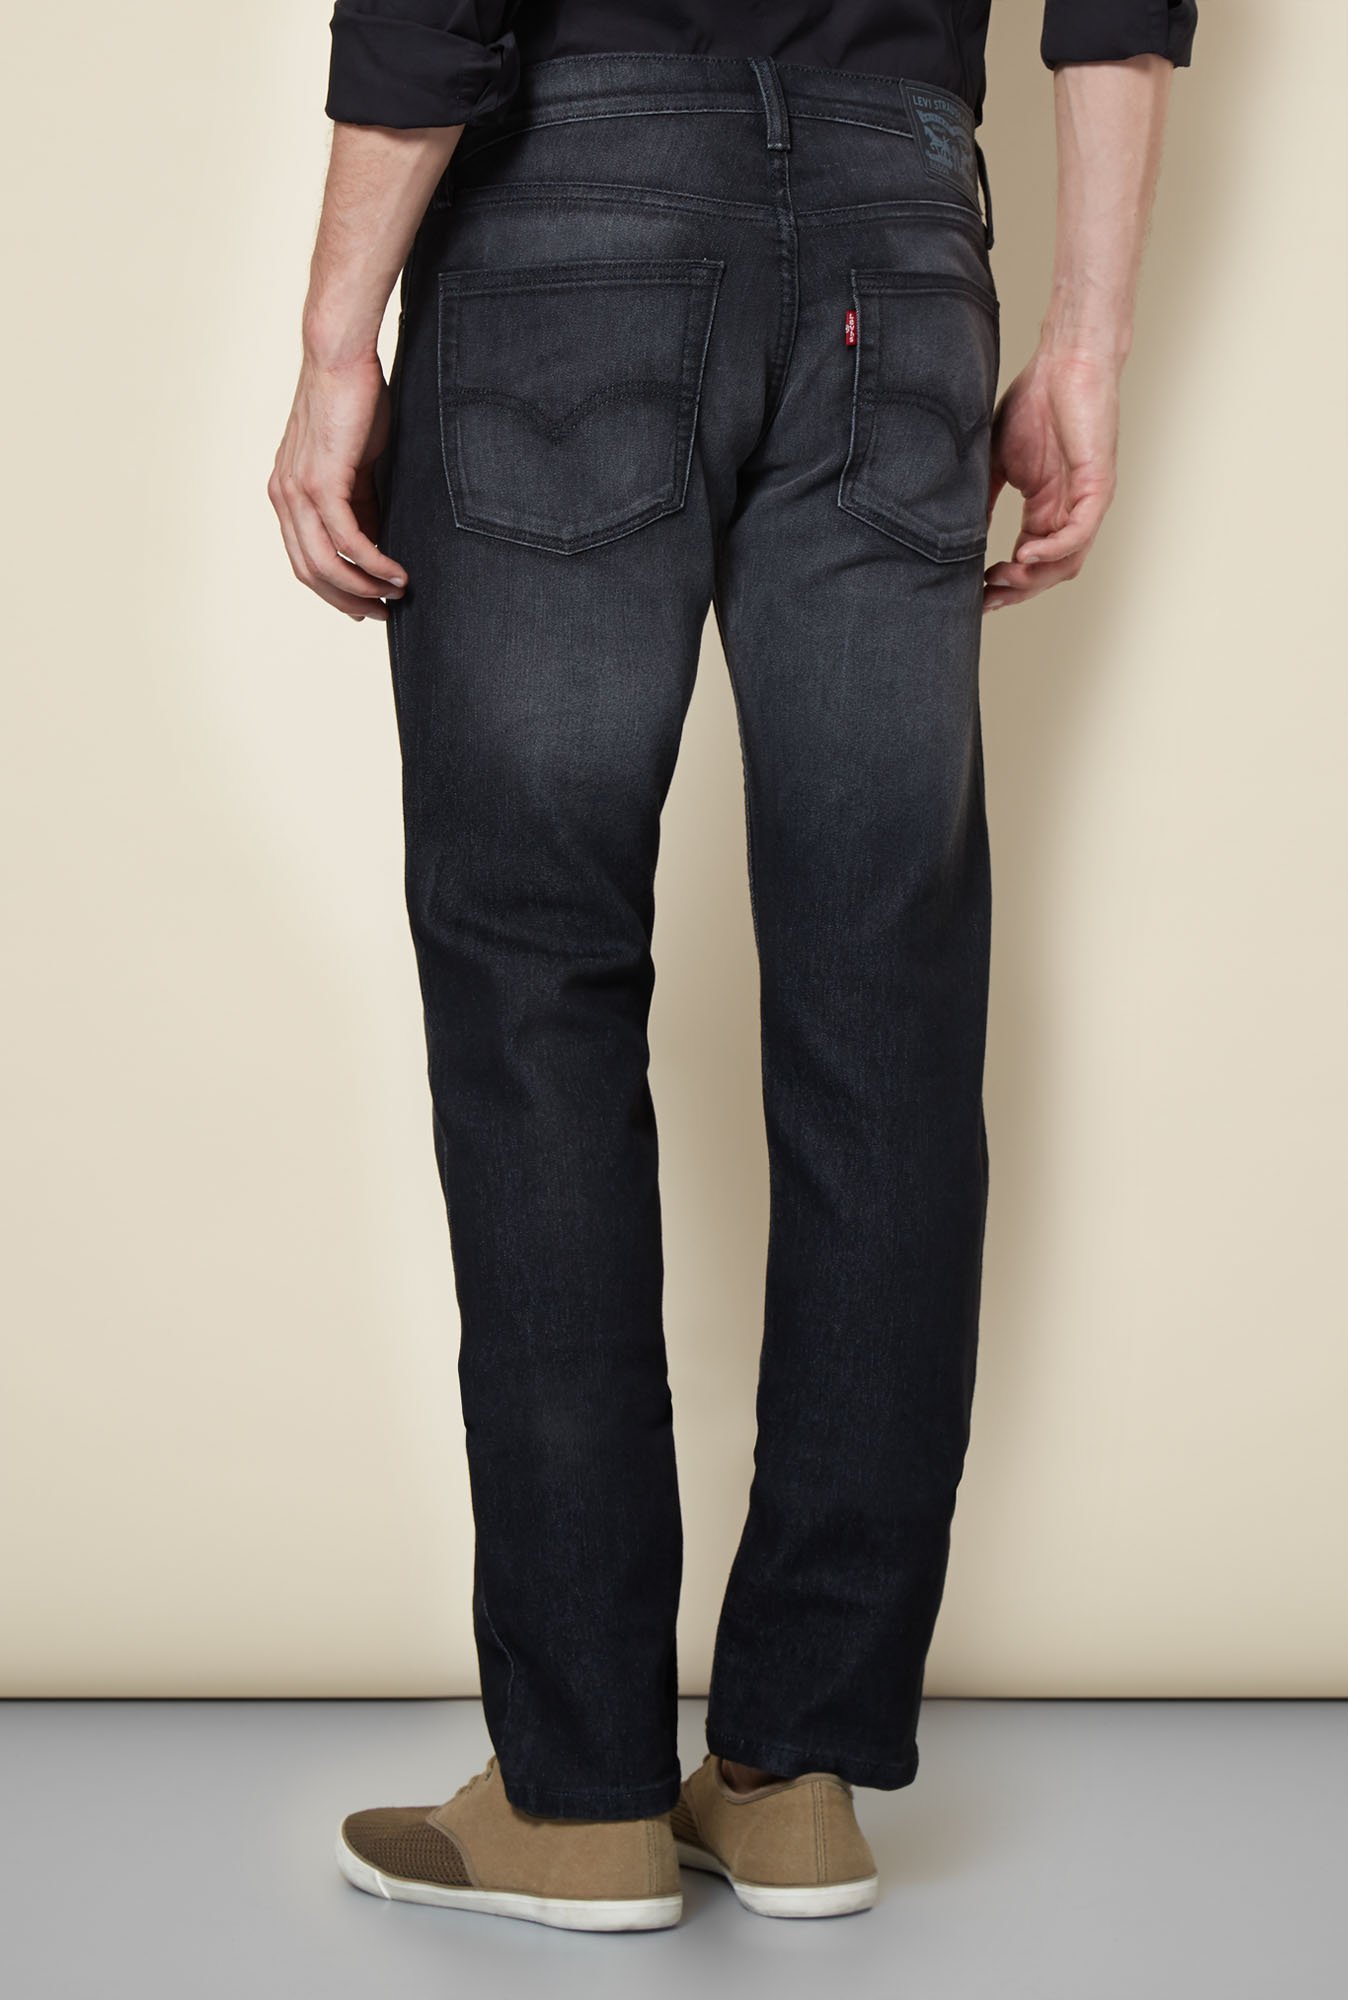 levis 65504 jeans price